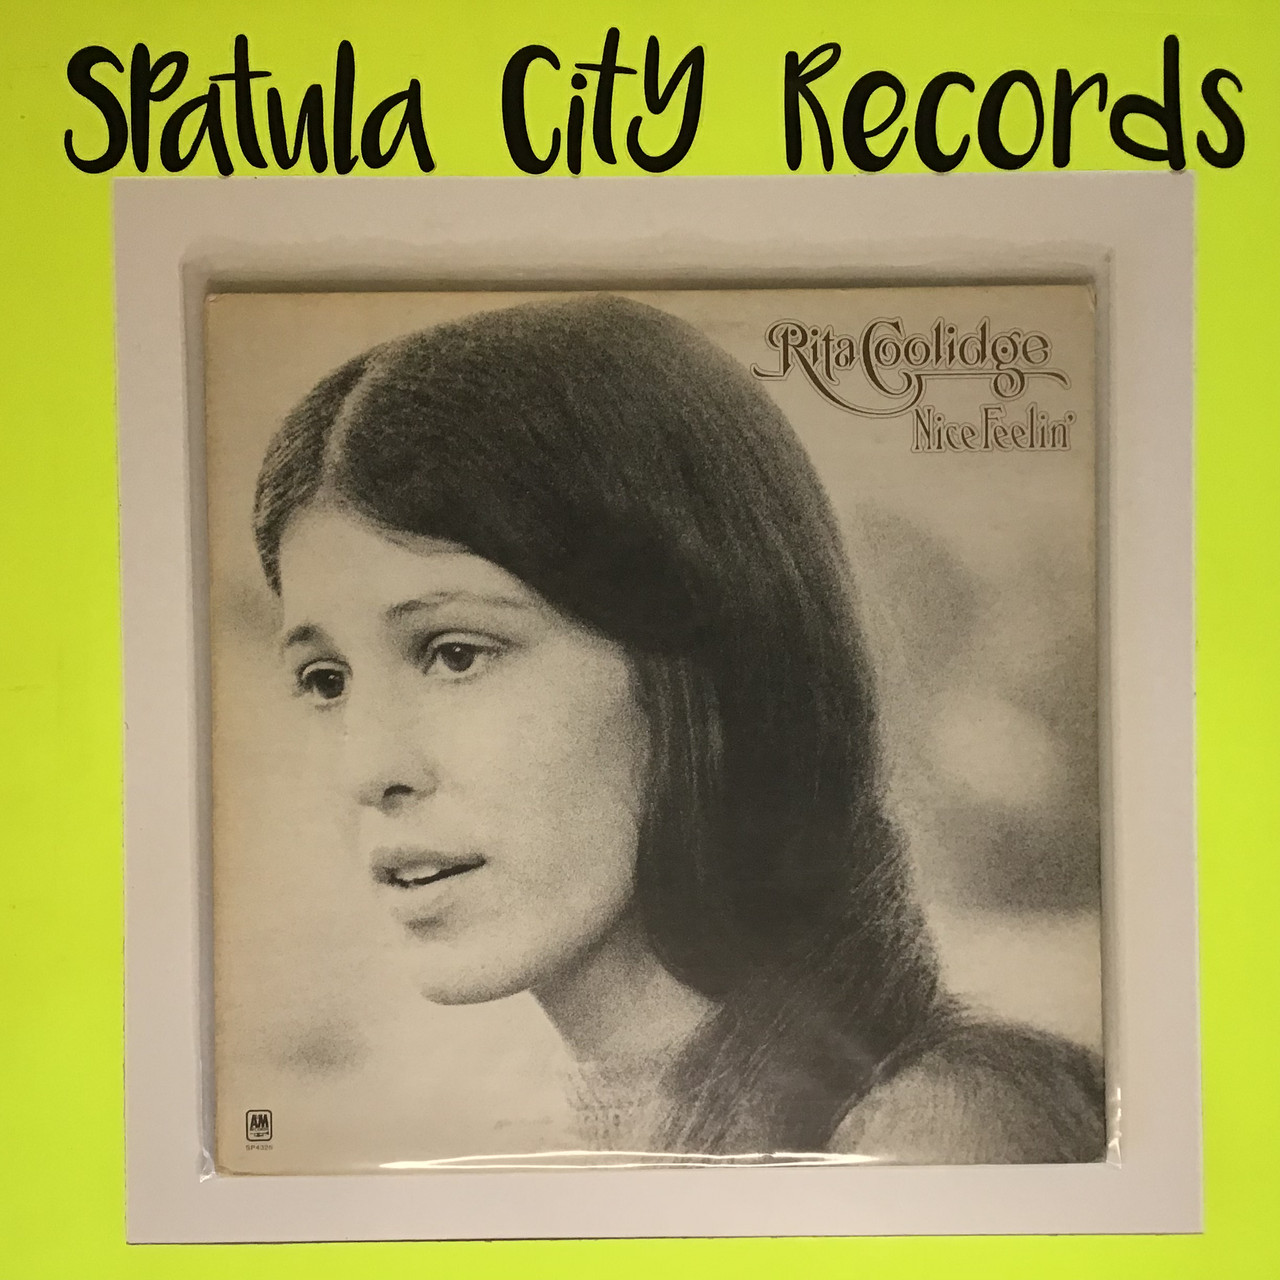 Rita Coolidge - Nice Feelin' - vinyl record album LP